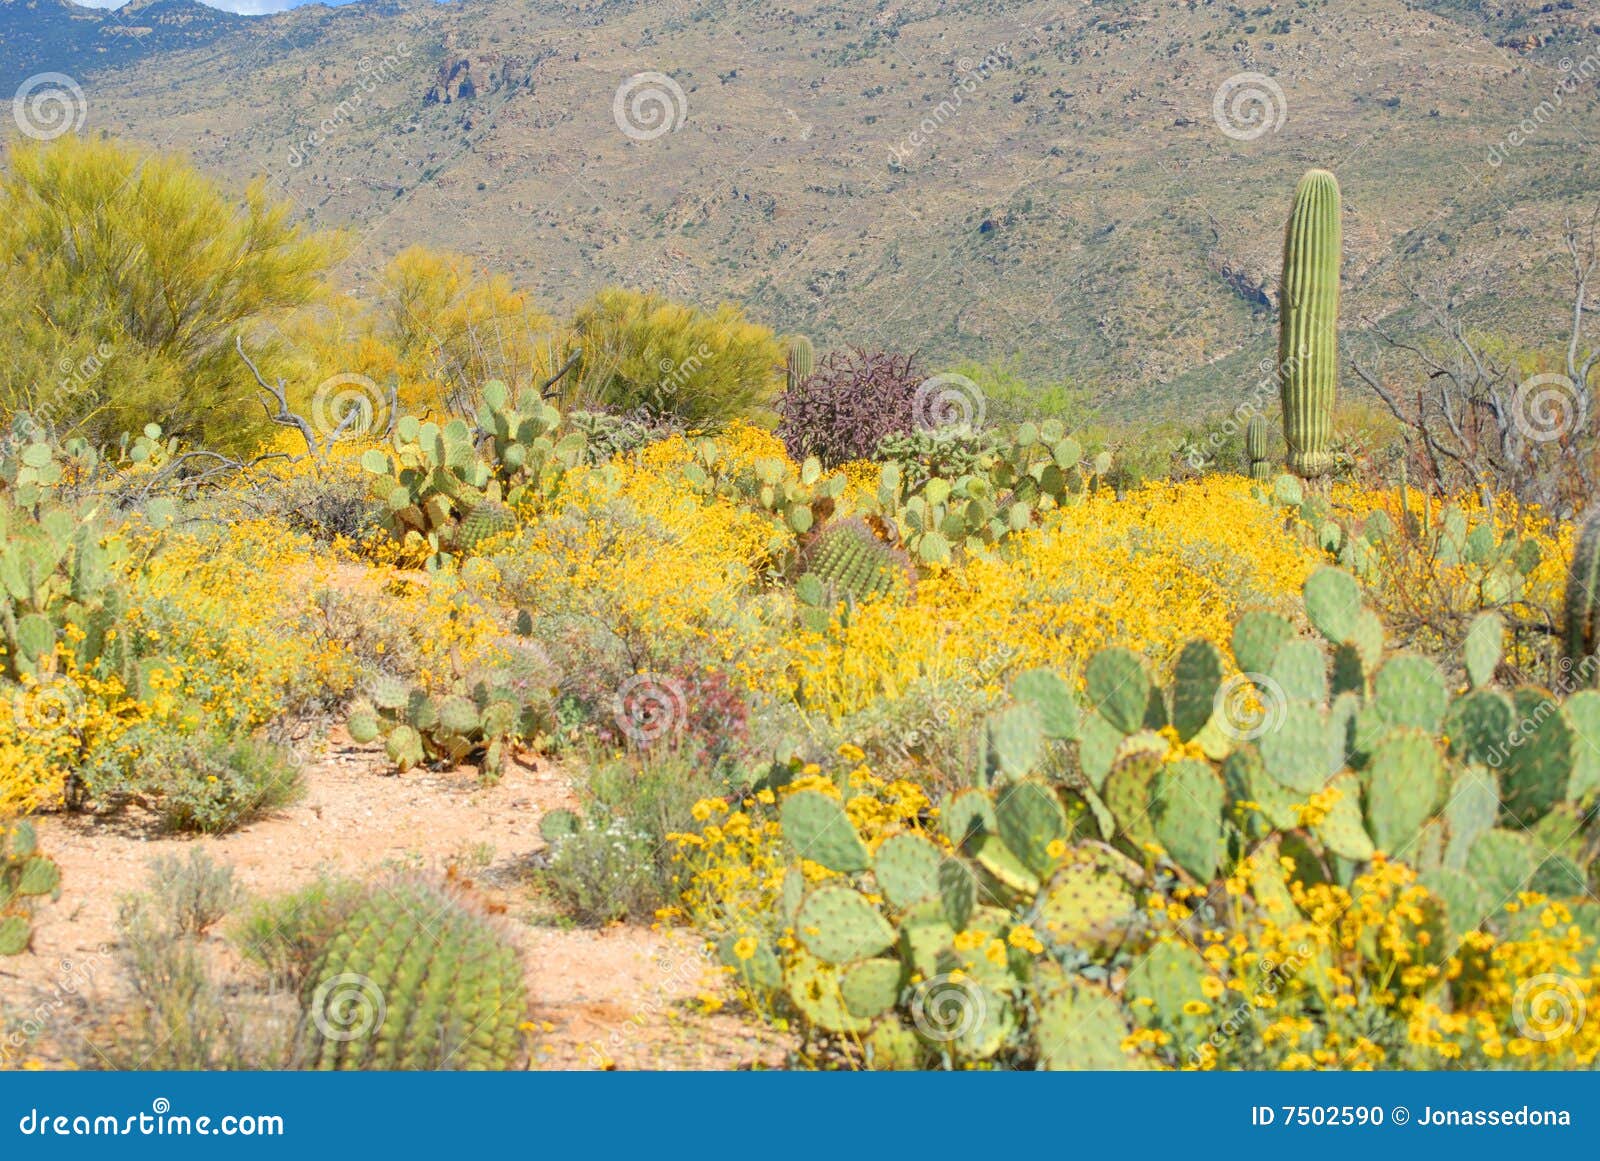 Desert in bloom stock photo. Image of shrubland, saquaro - 7502590